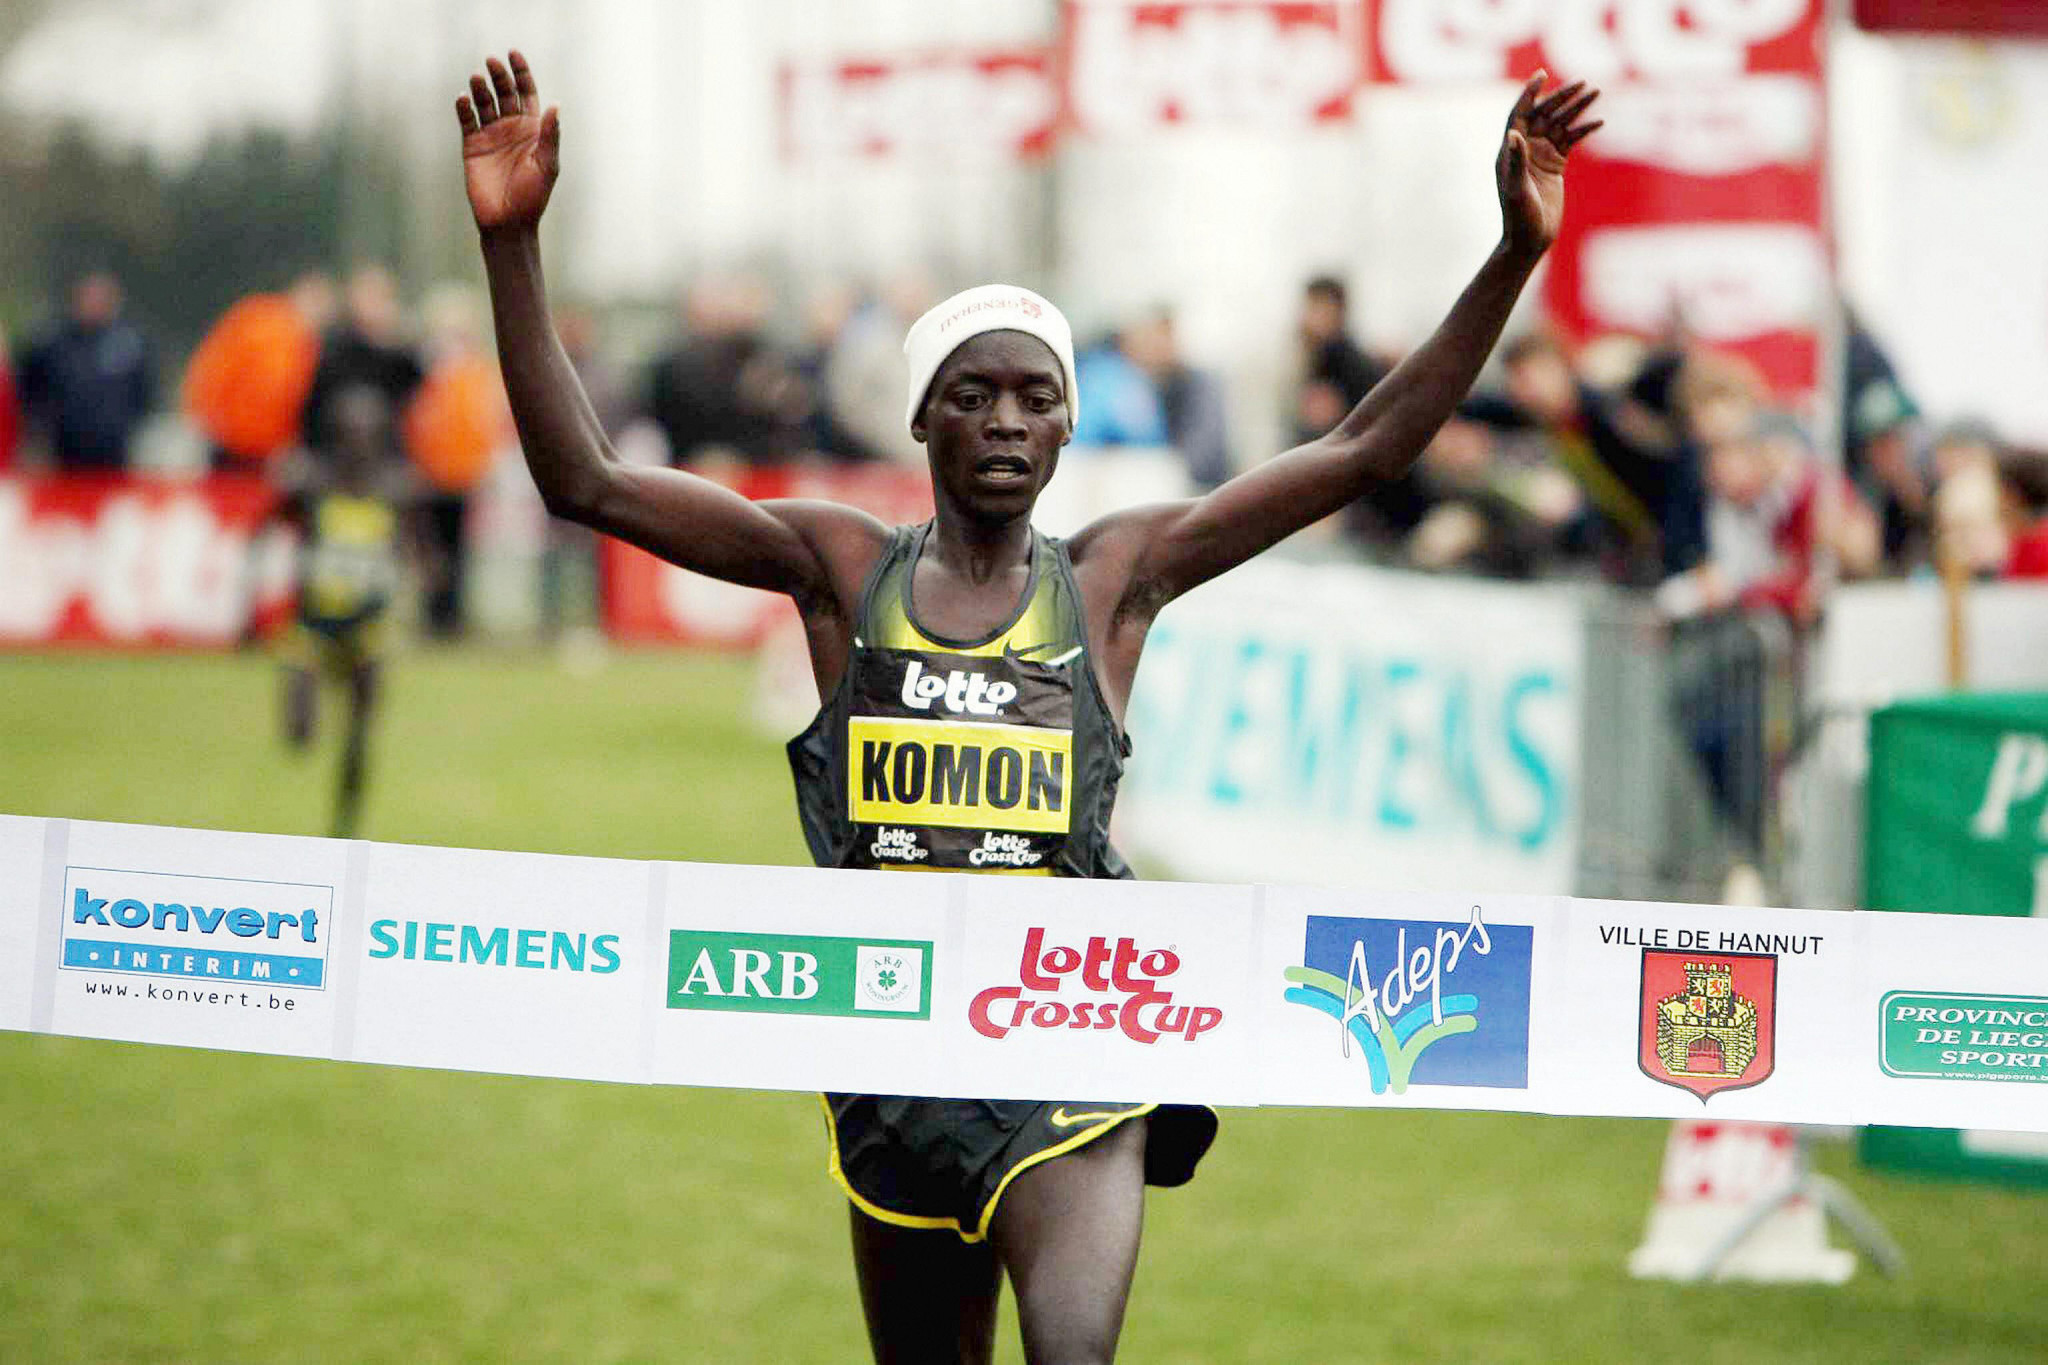 Leonard Komon has won the IAAF Cross Country Permit in Elgoibar three times ©Getty Images